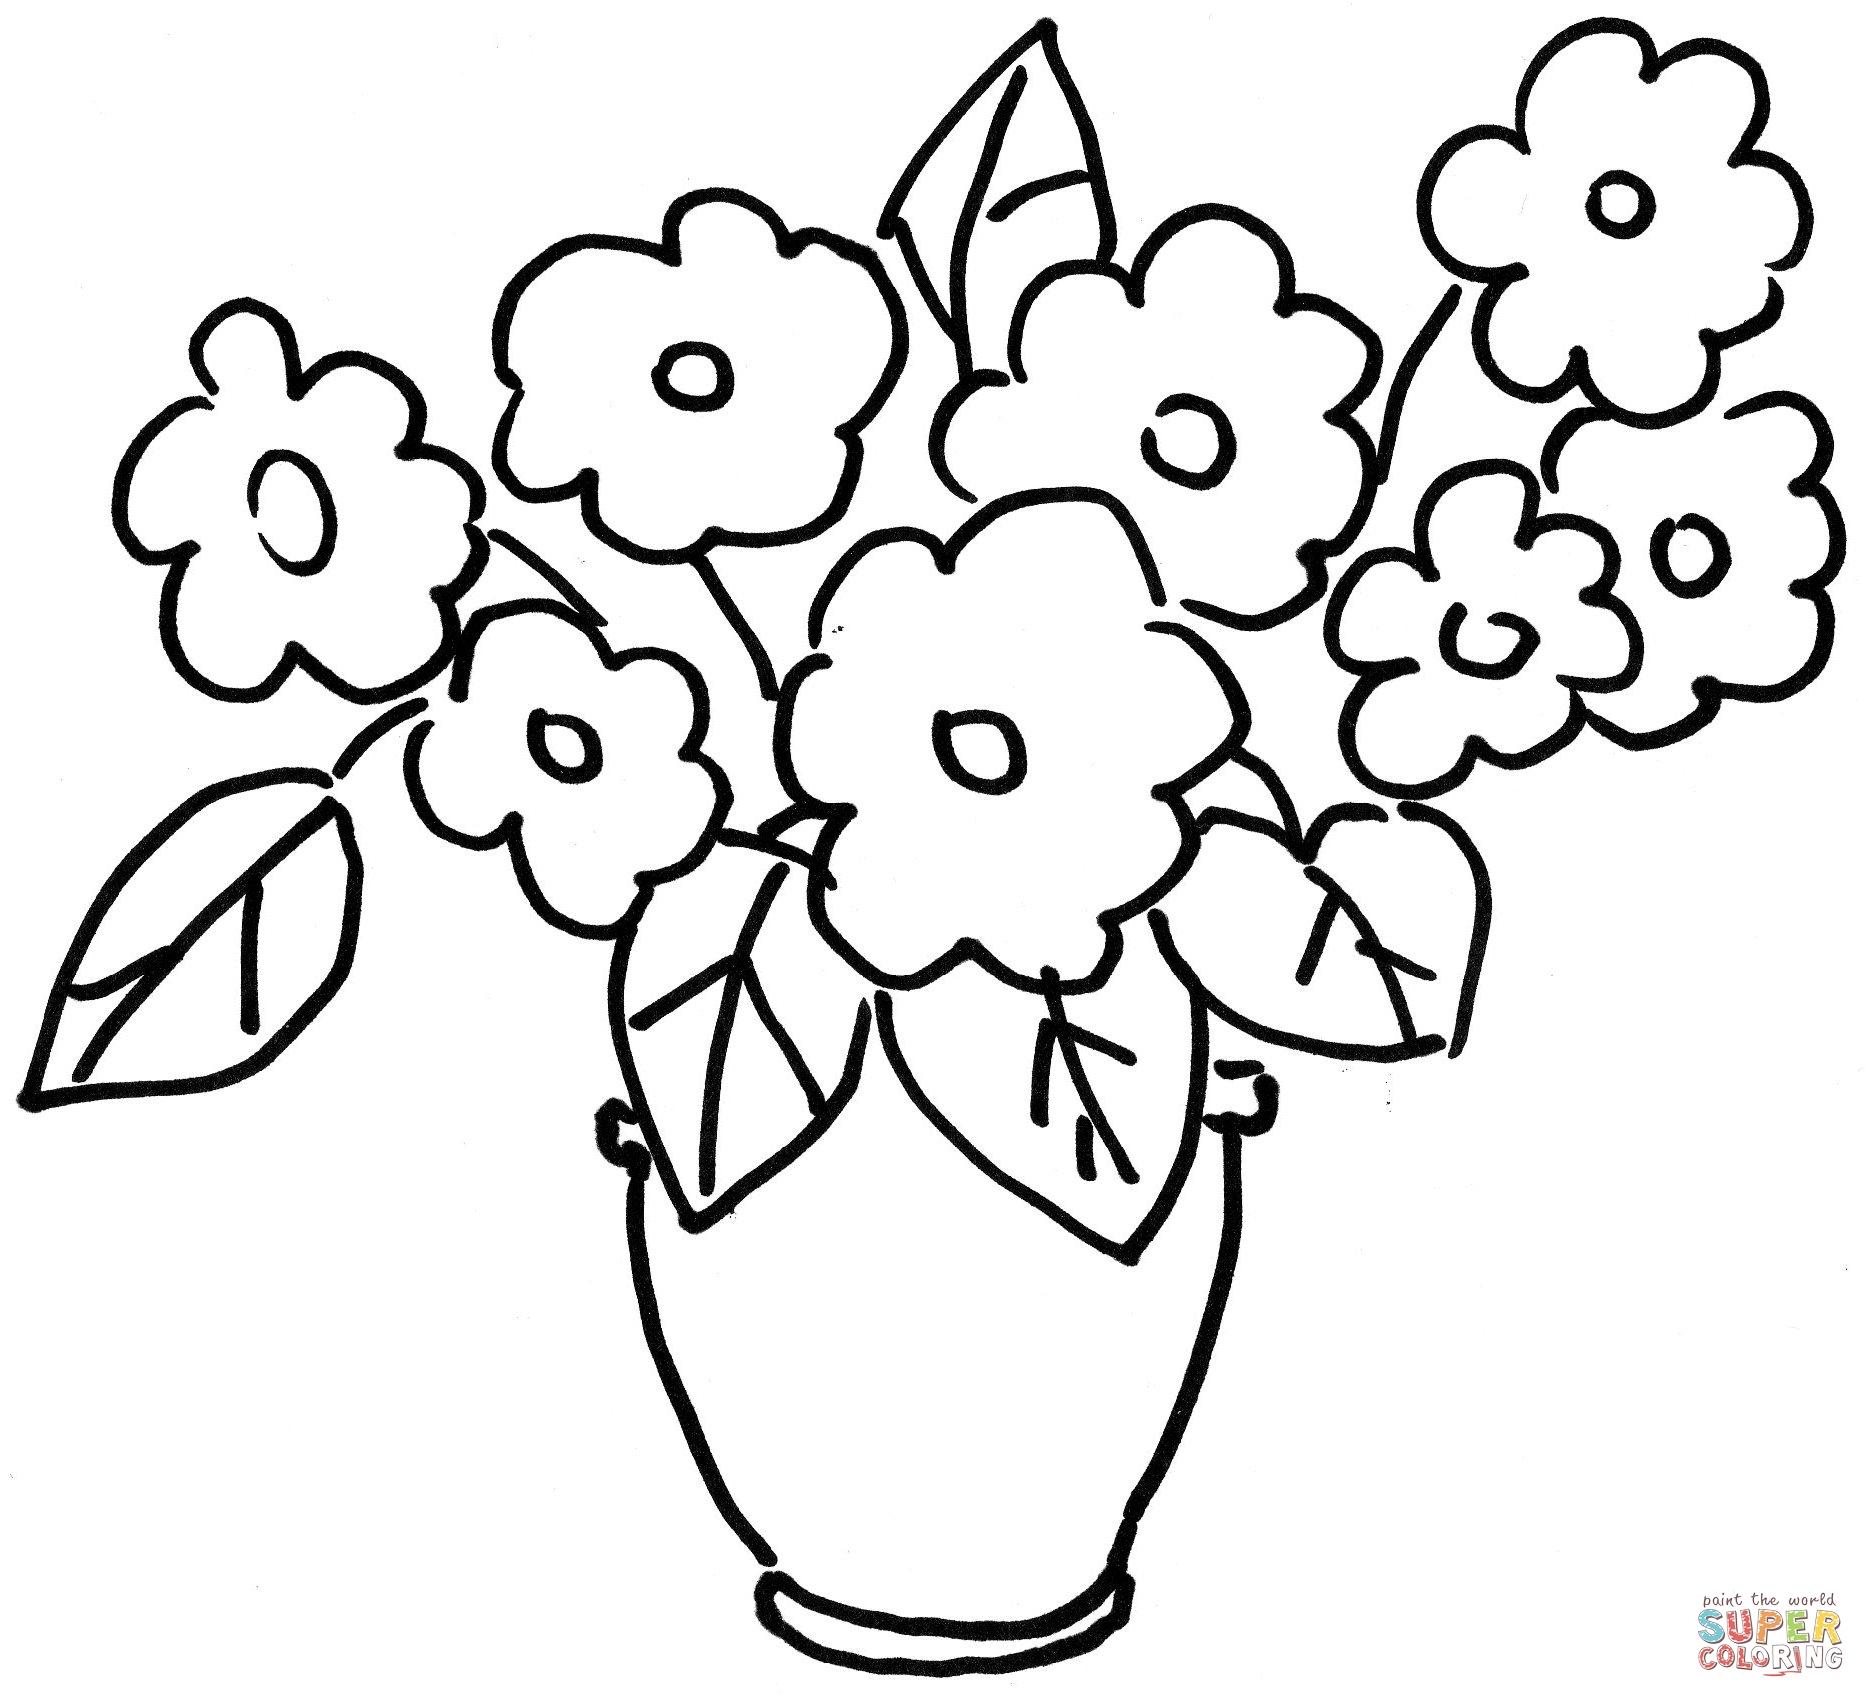 Violet Flower Drawing at GetDrawings | Free download